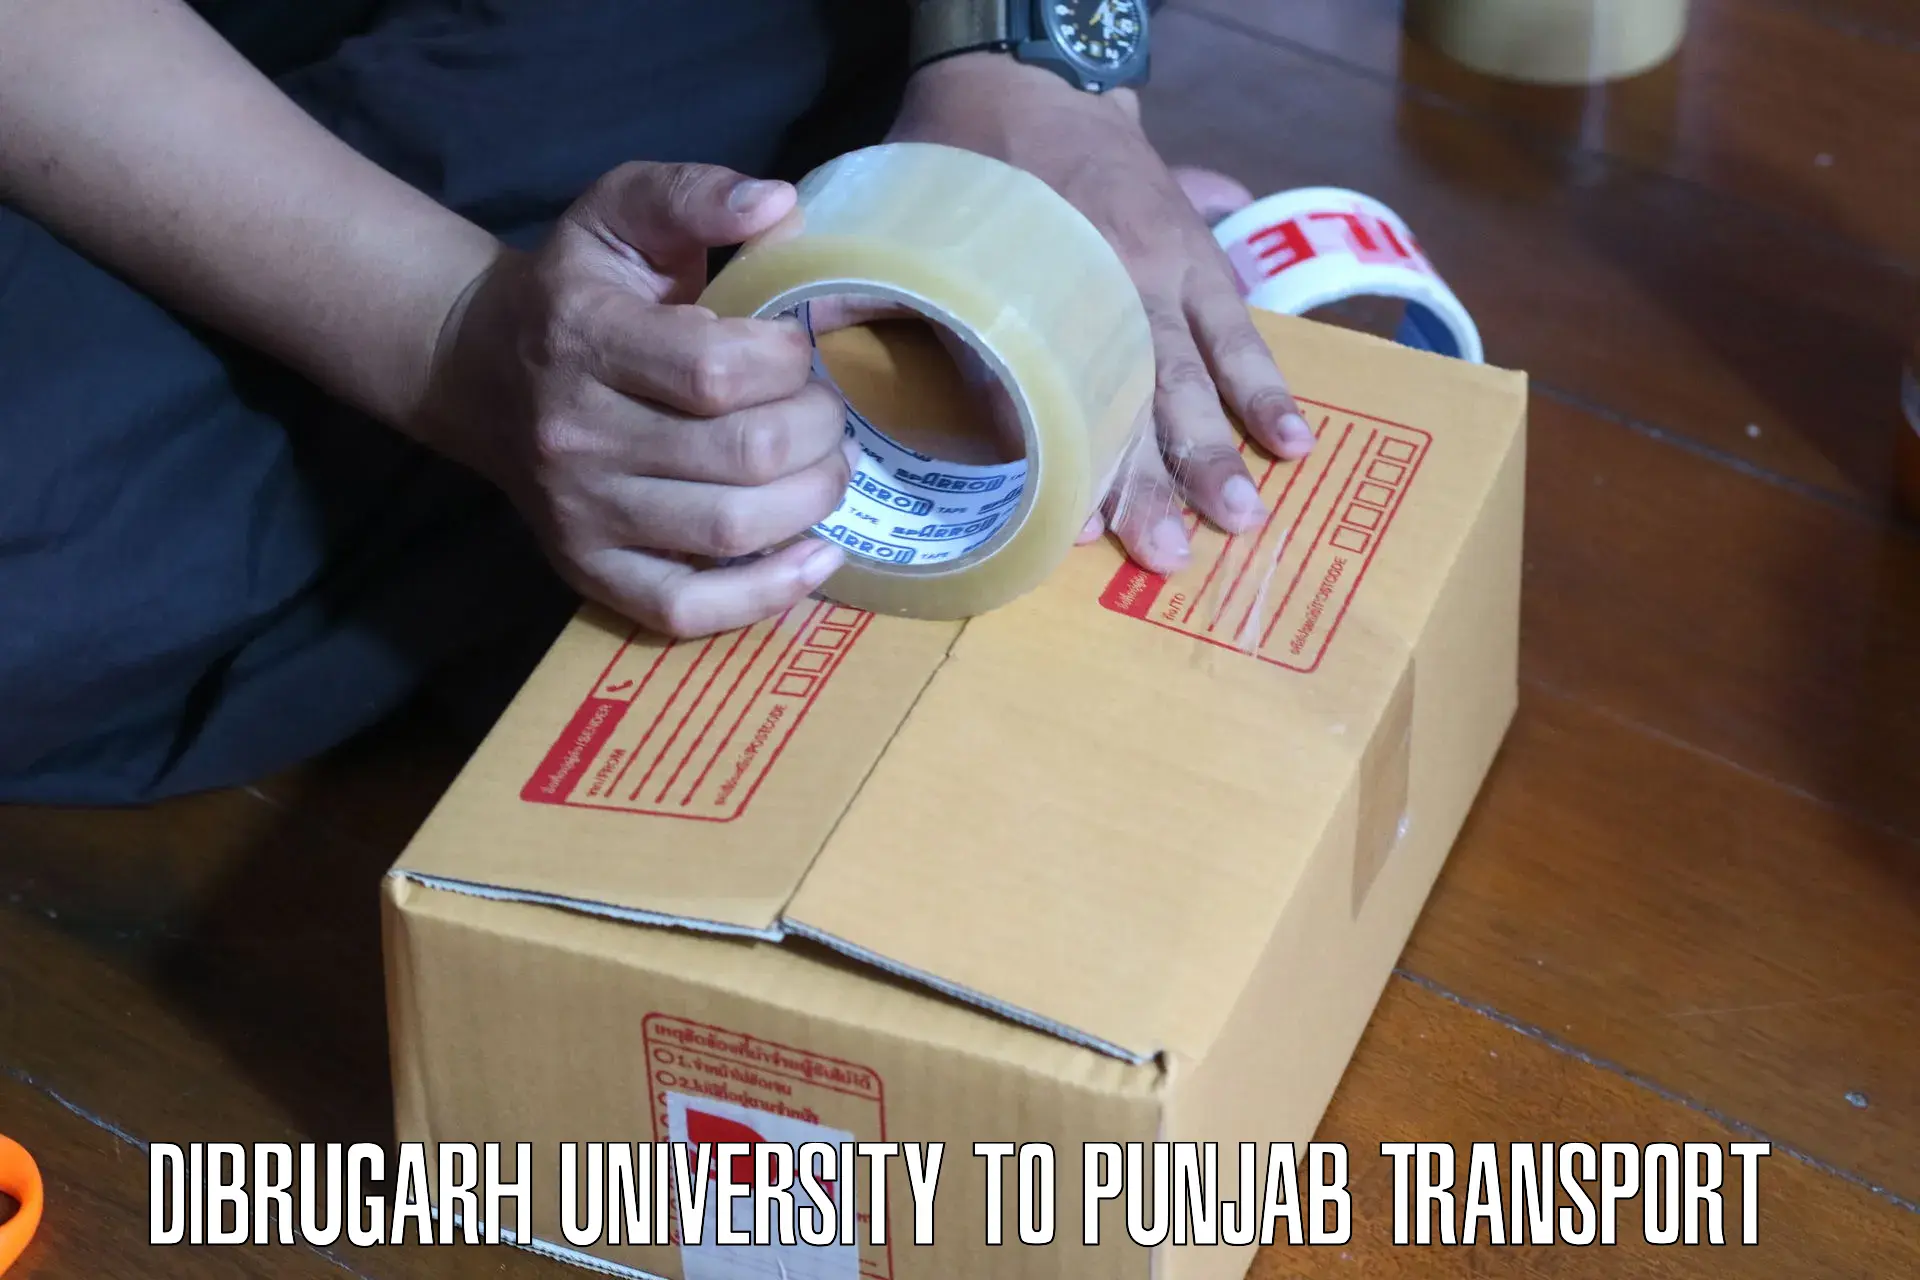 Daily parcel service transport Dibrugarh University to Hoshiarpur